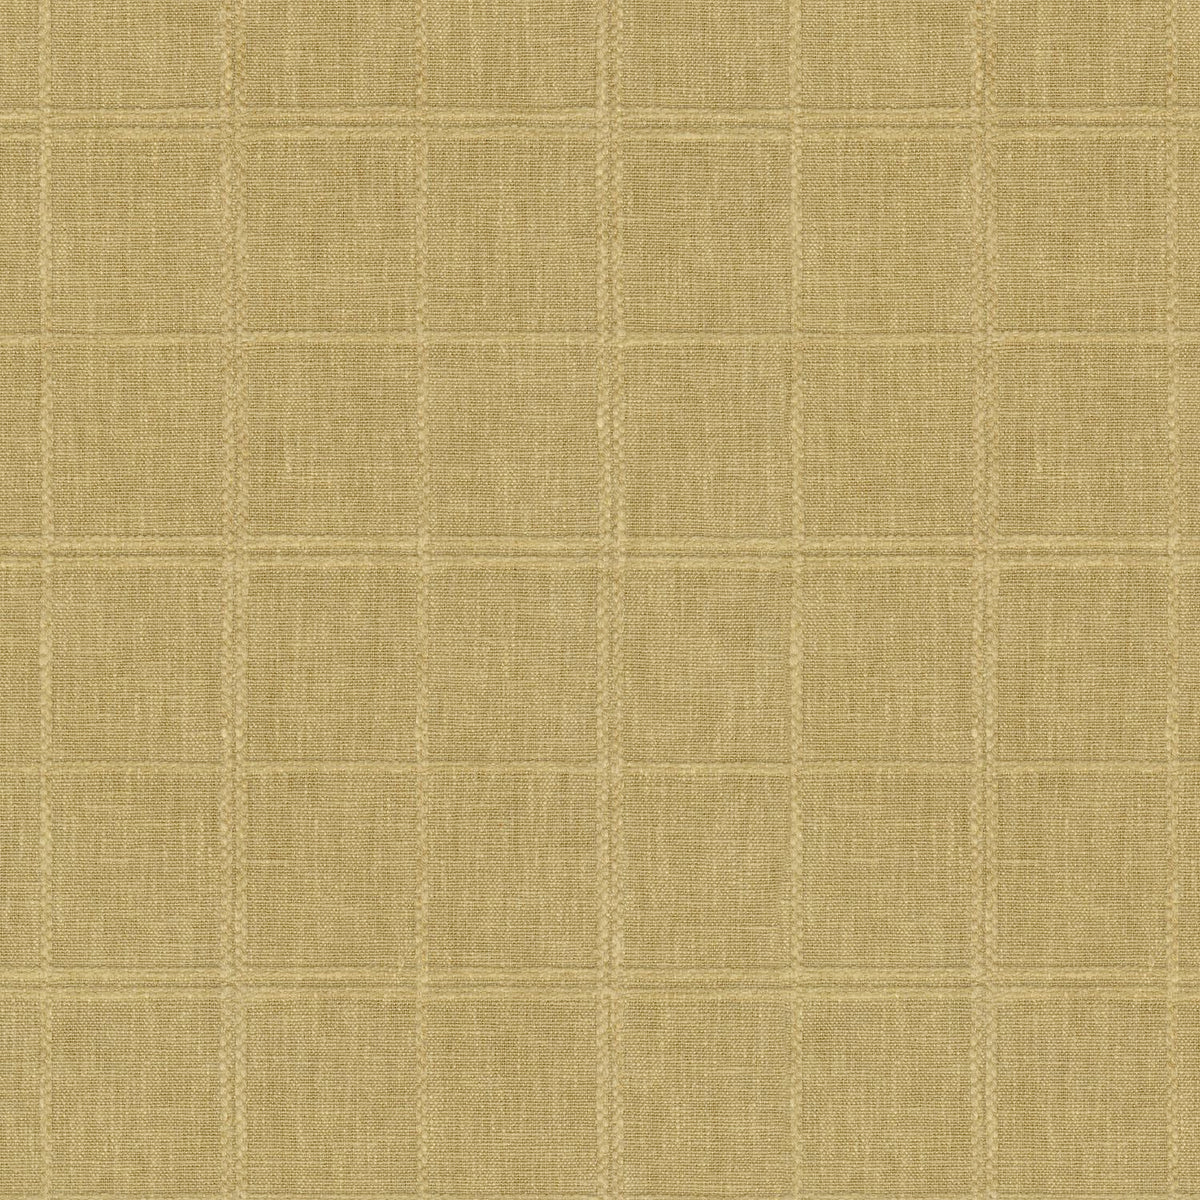 P/K Lifestyles Moray - Golden 410658 Fabric Swatch